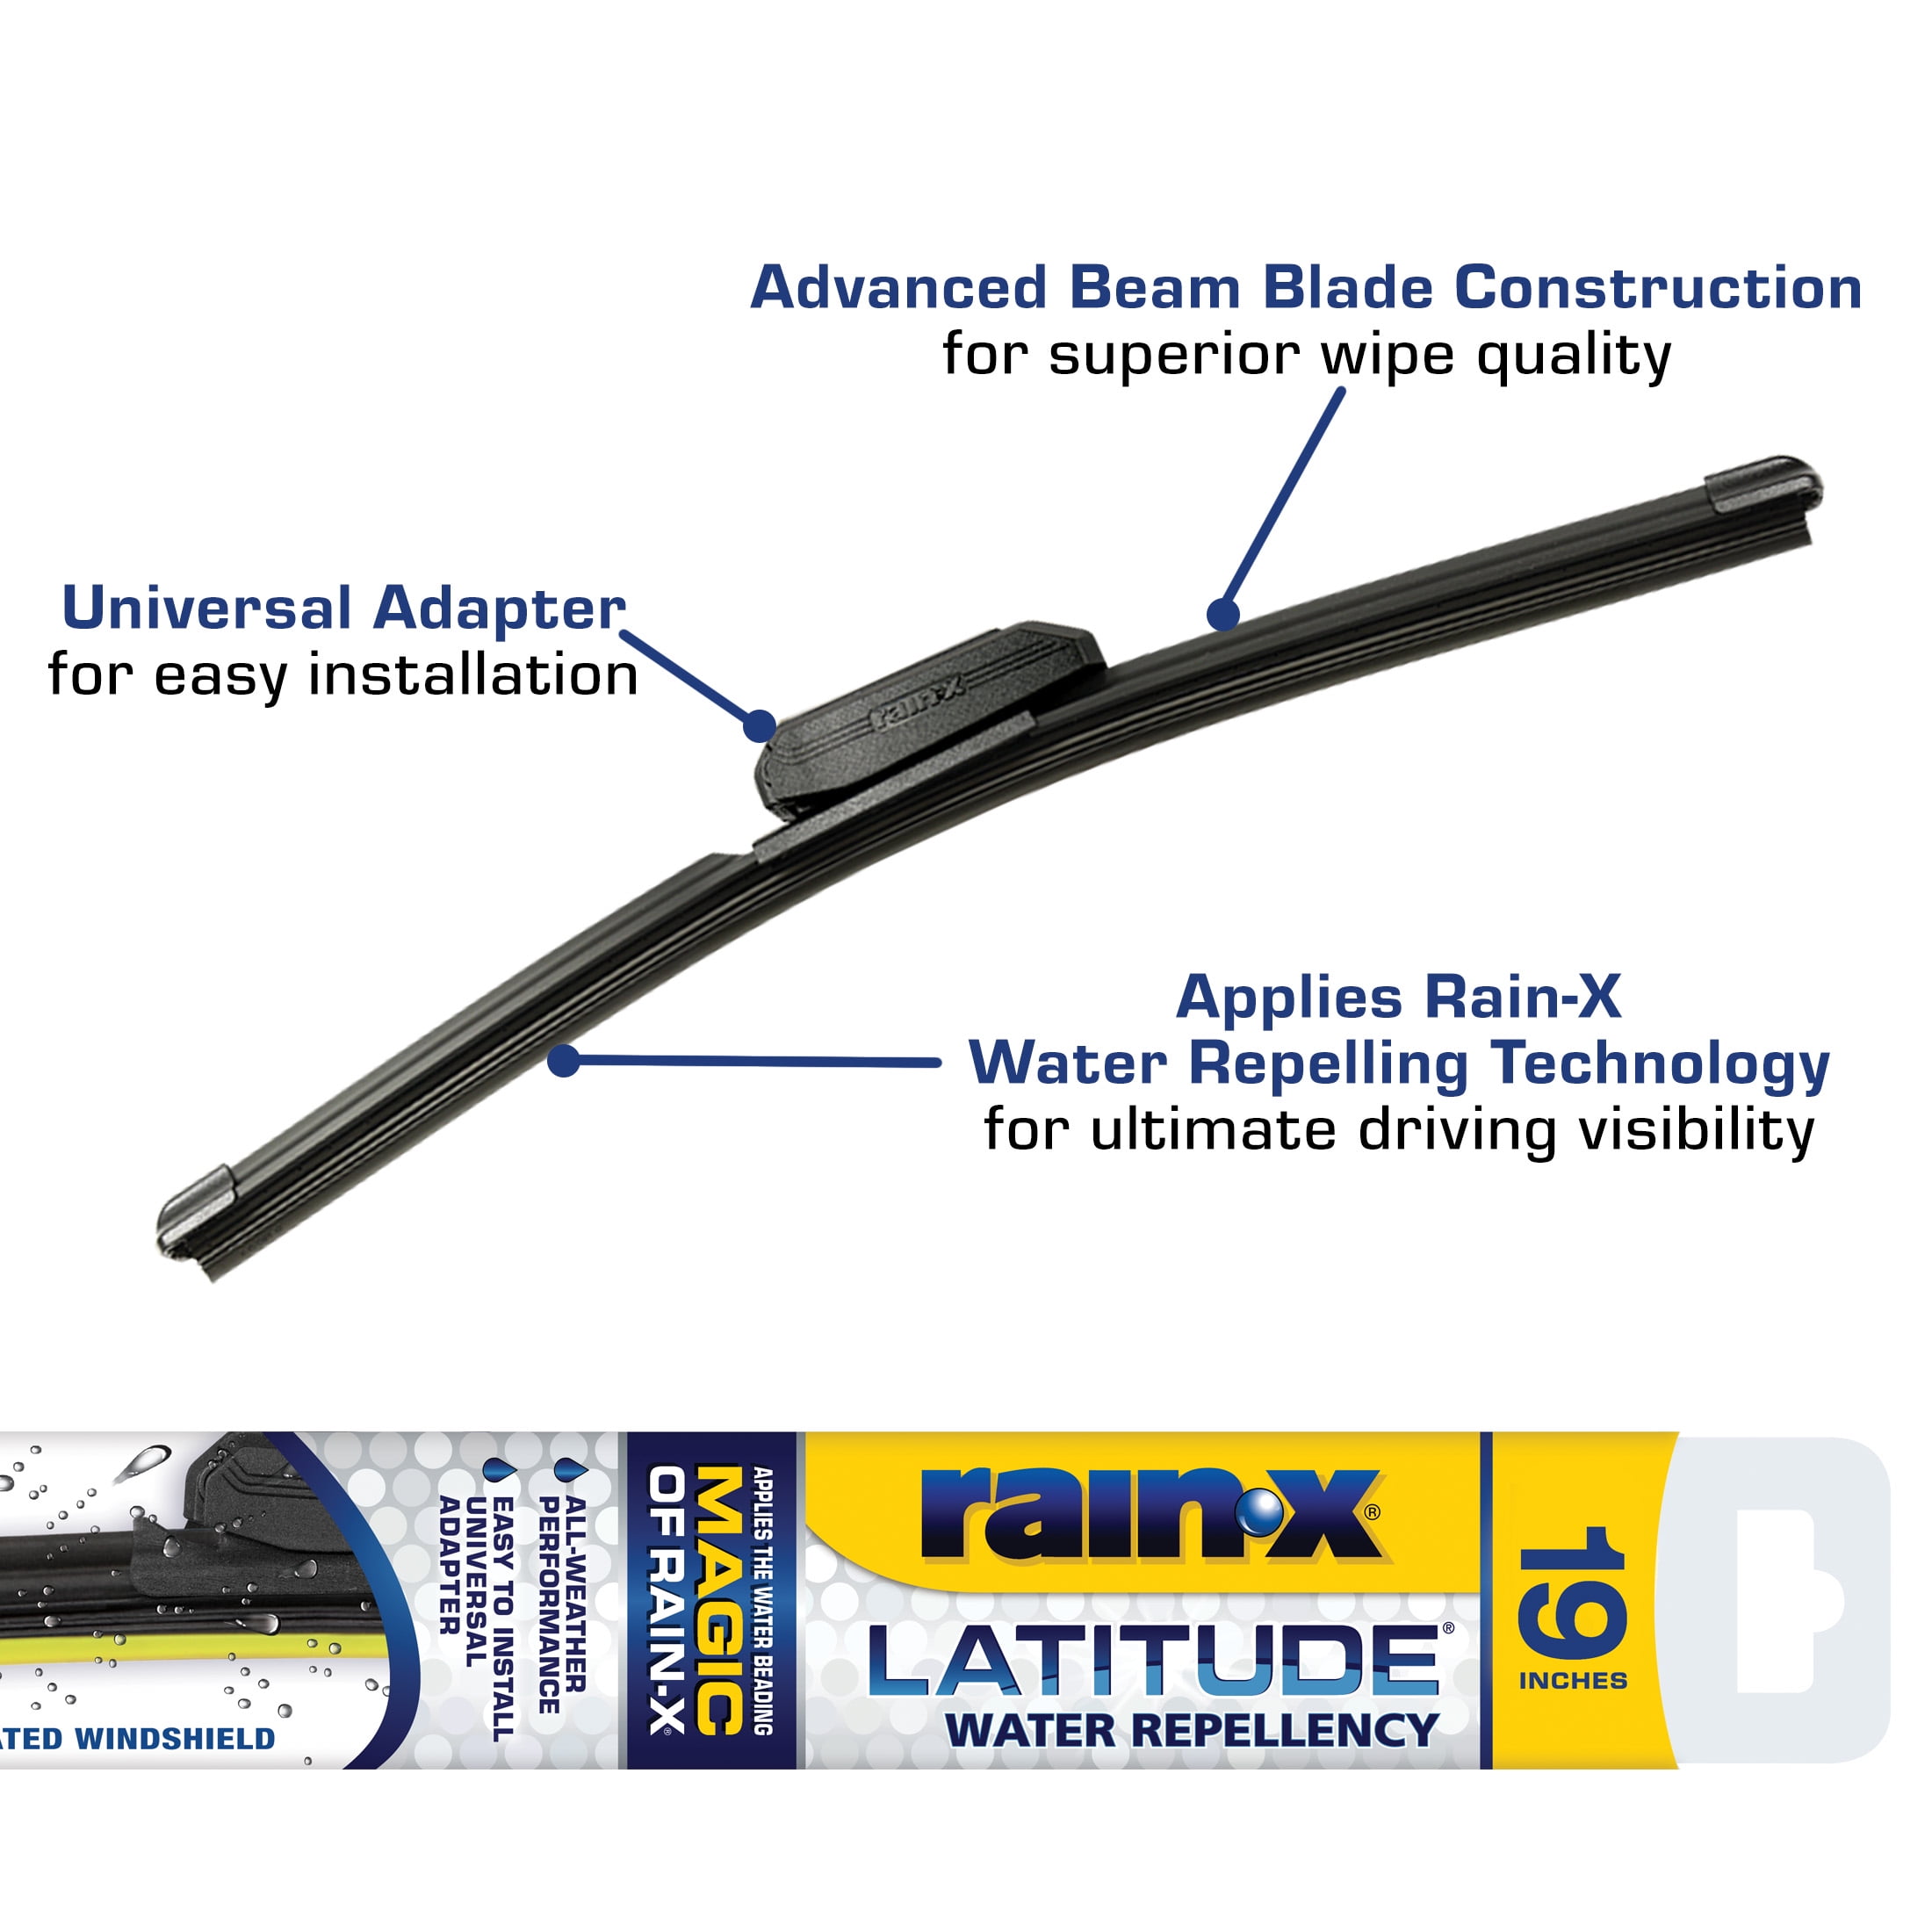 Rain-X Latitude Water Repellency 19" 2-IN-1 Windshield Wiper Blade